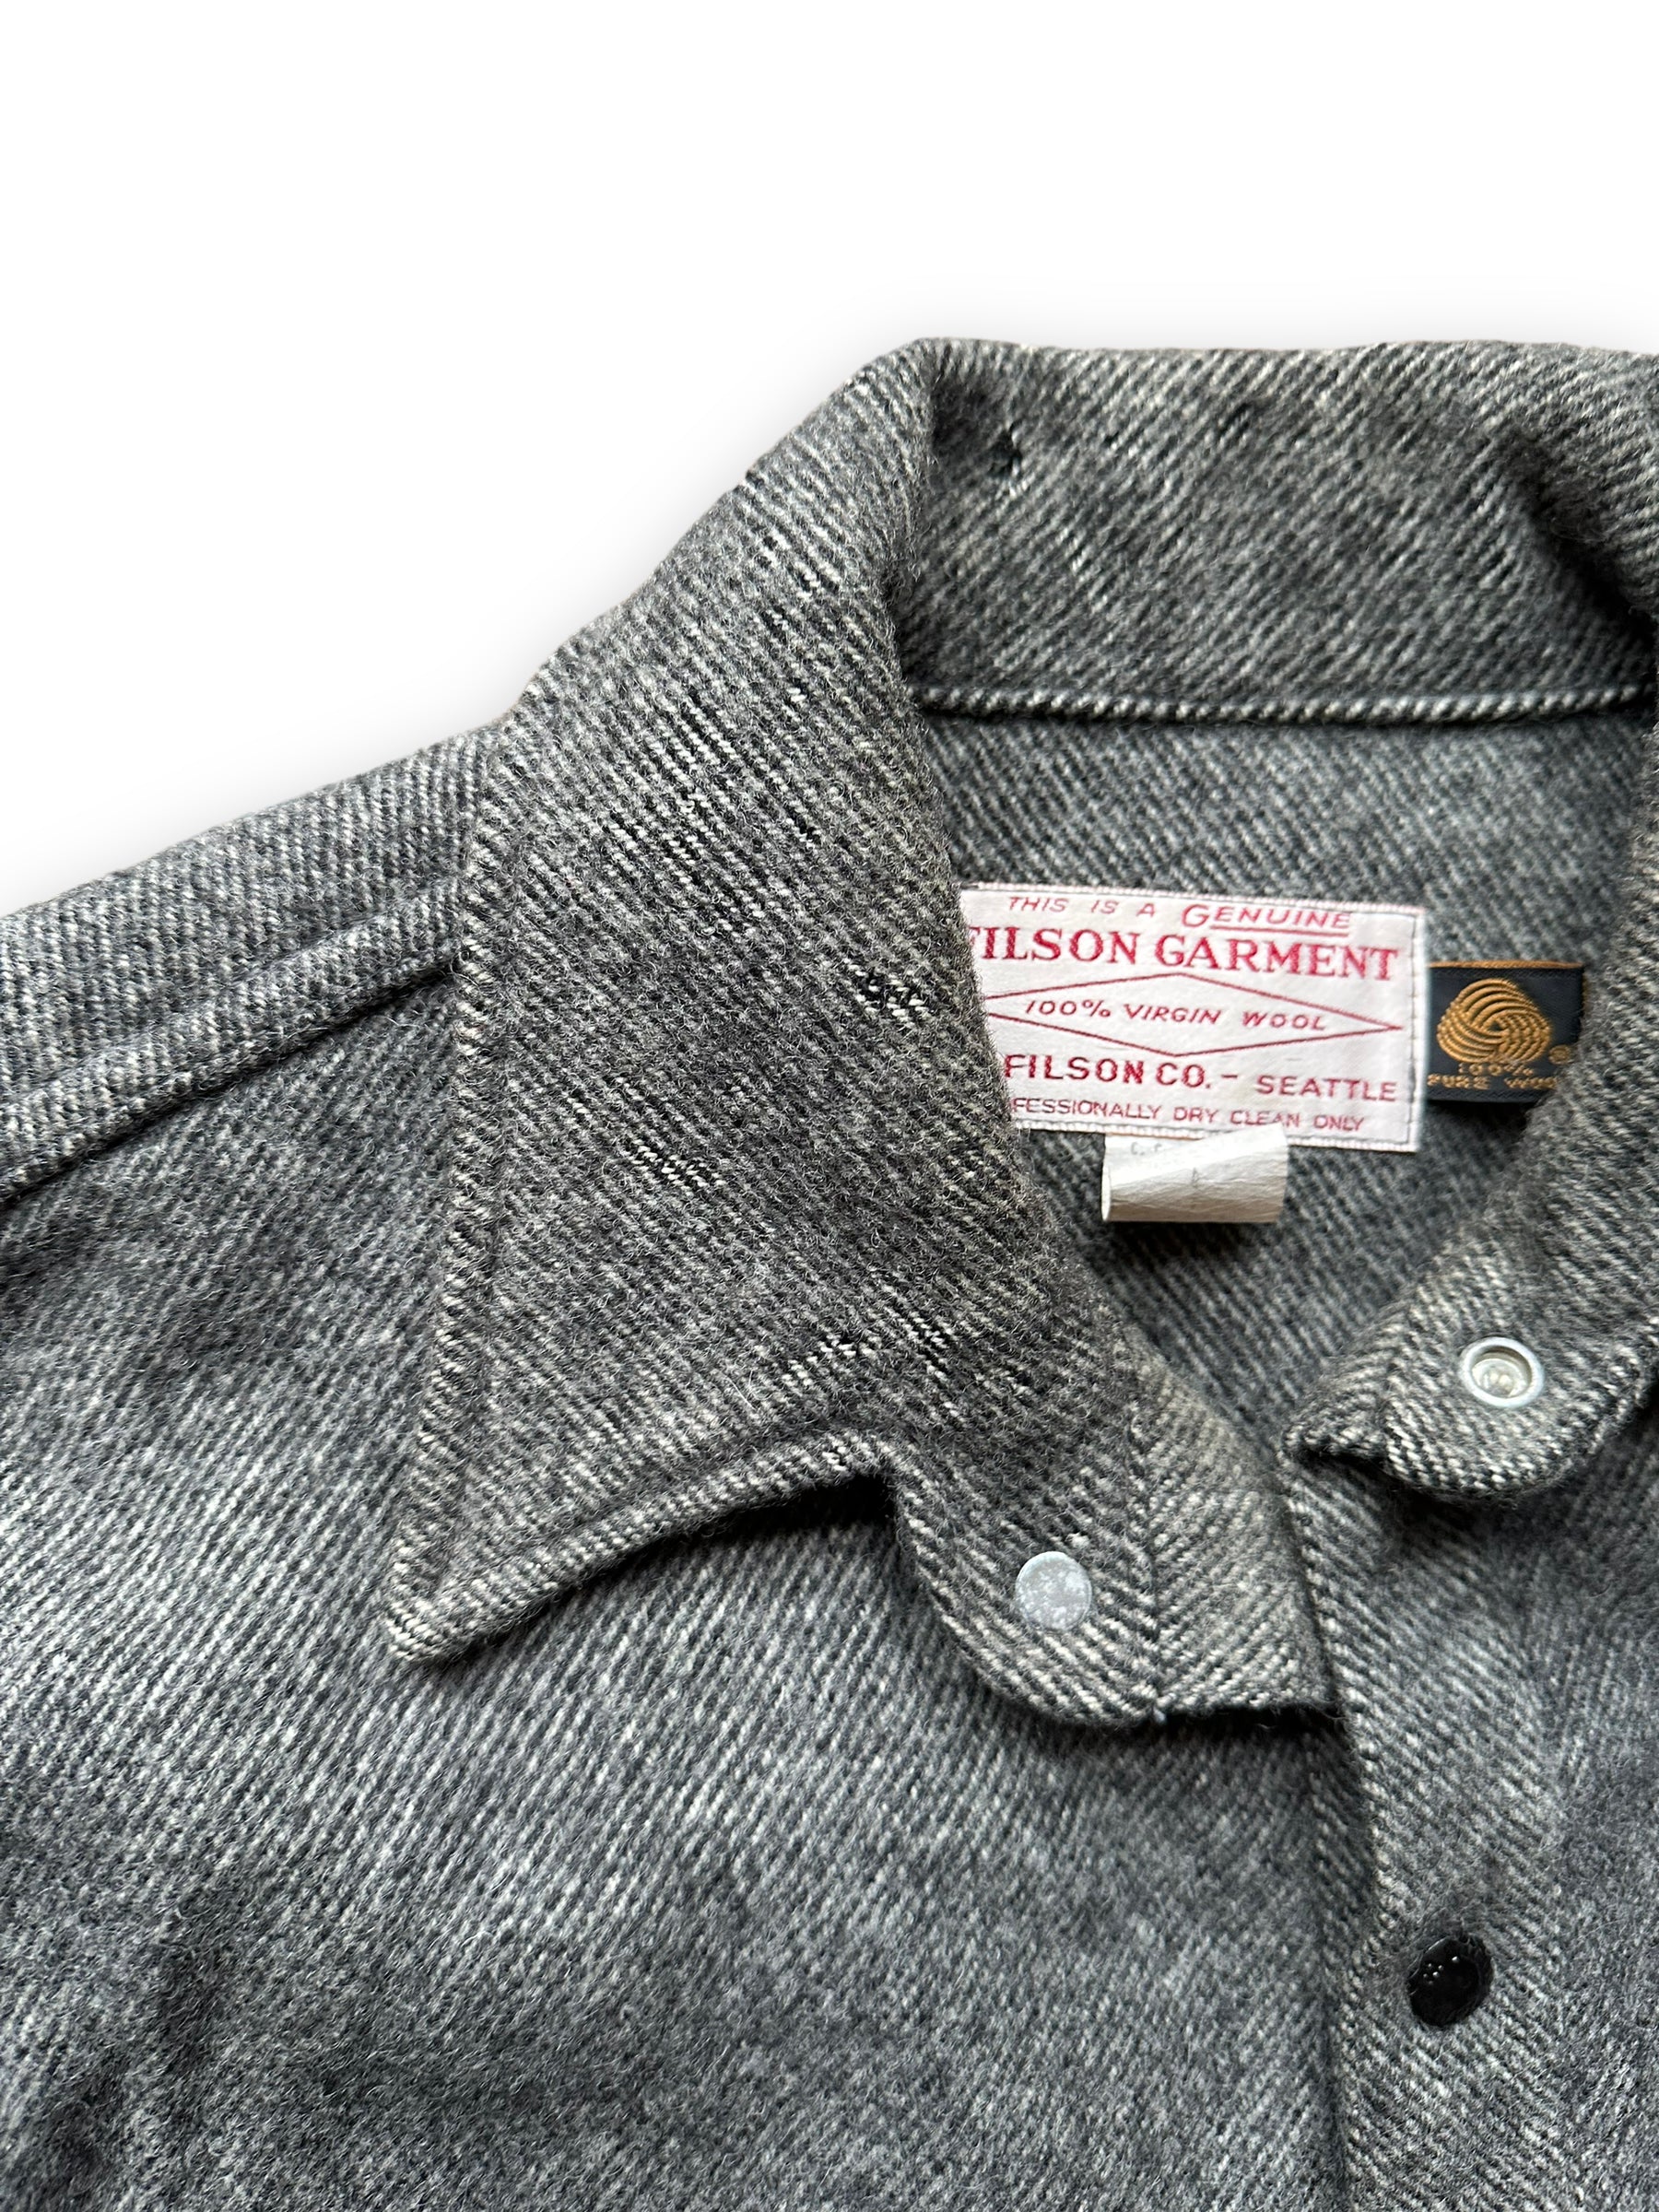 Moth Bites on Neck of Vintage Filson Grey Herringbone Cape Coat SZ Large  |  Barn Owl Vintage Goods | Vintage Wool Workwear Seattle